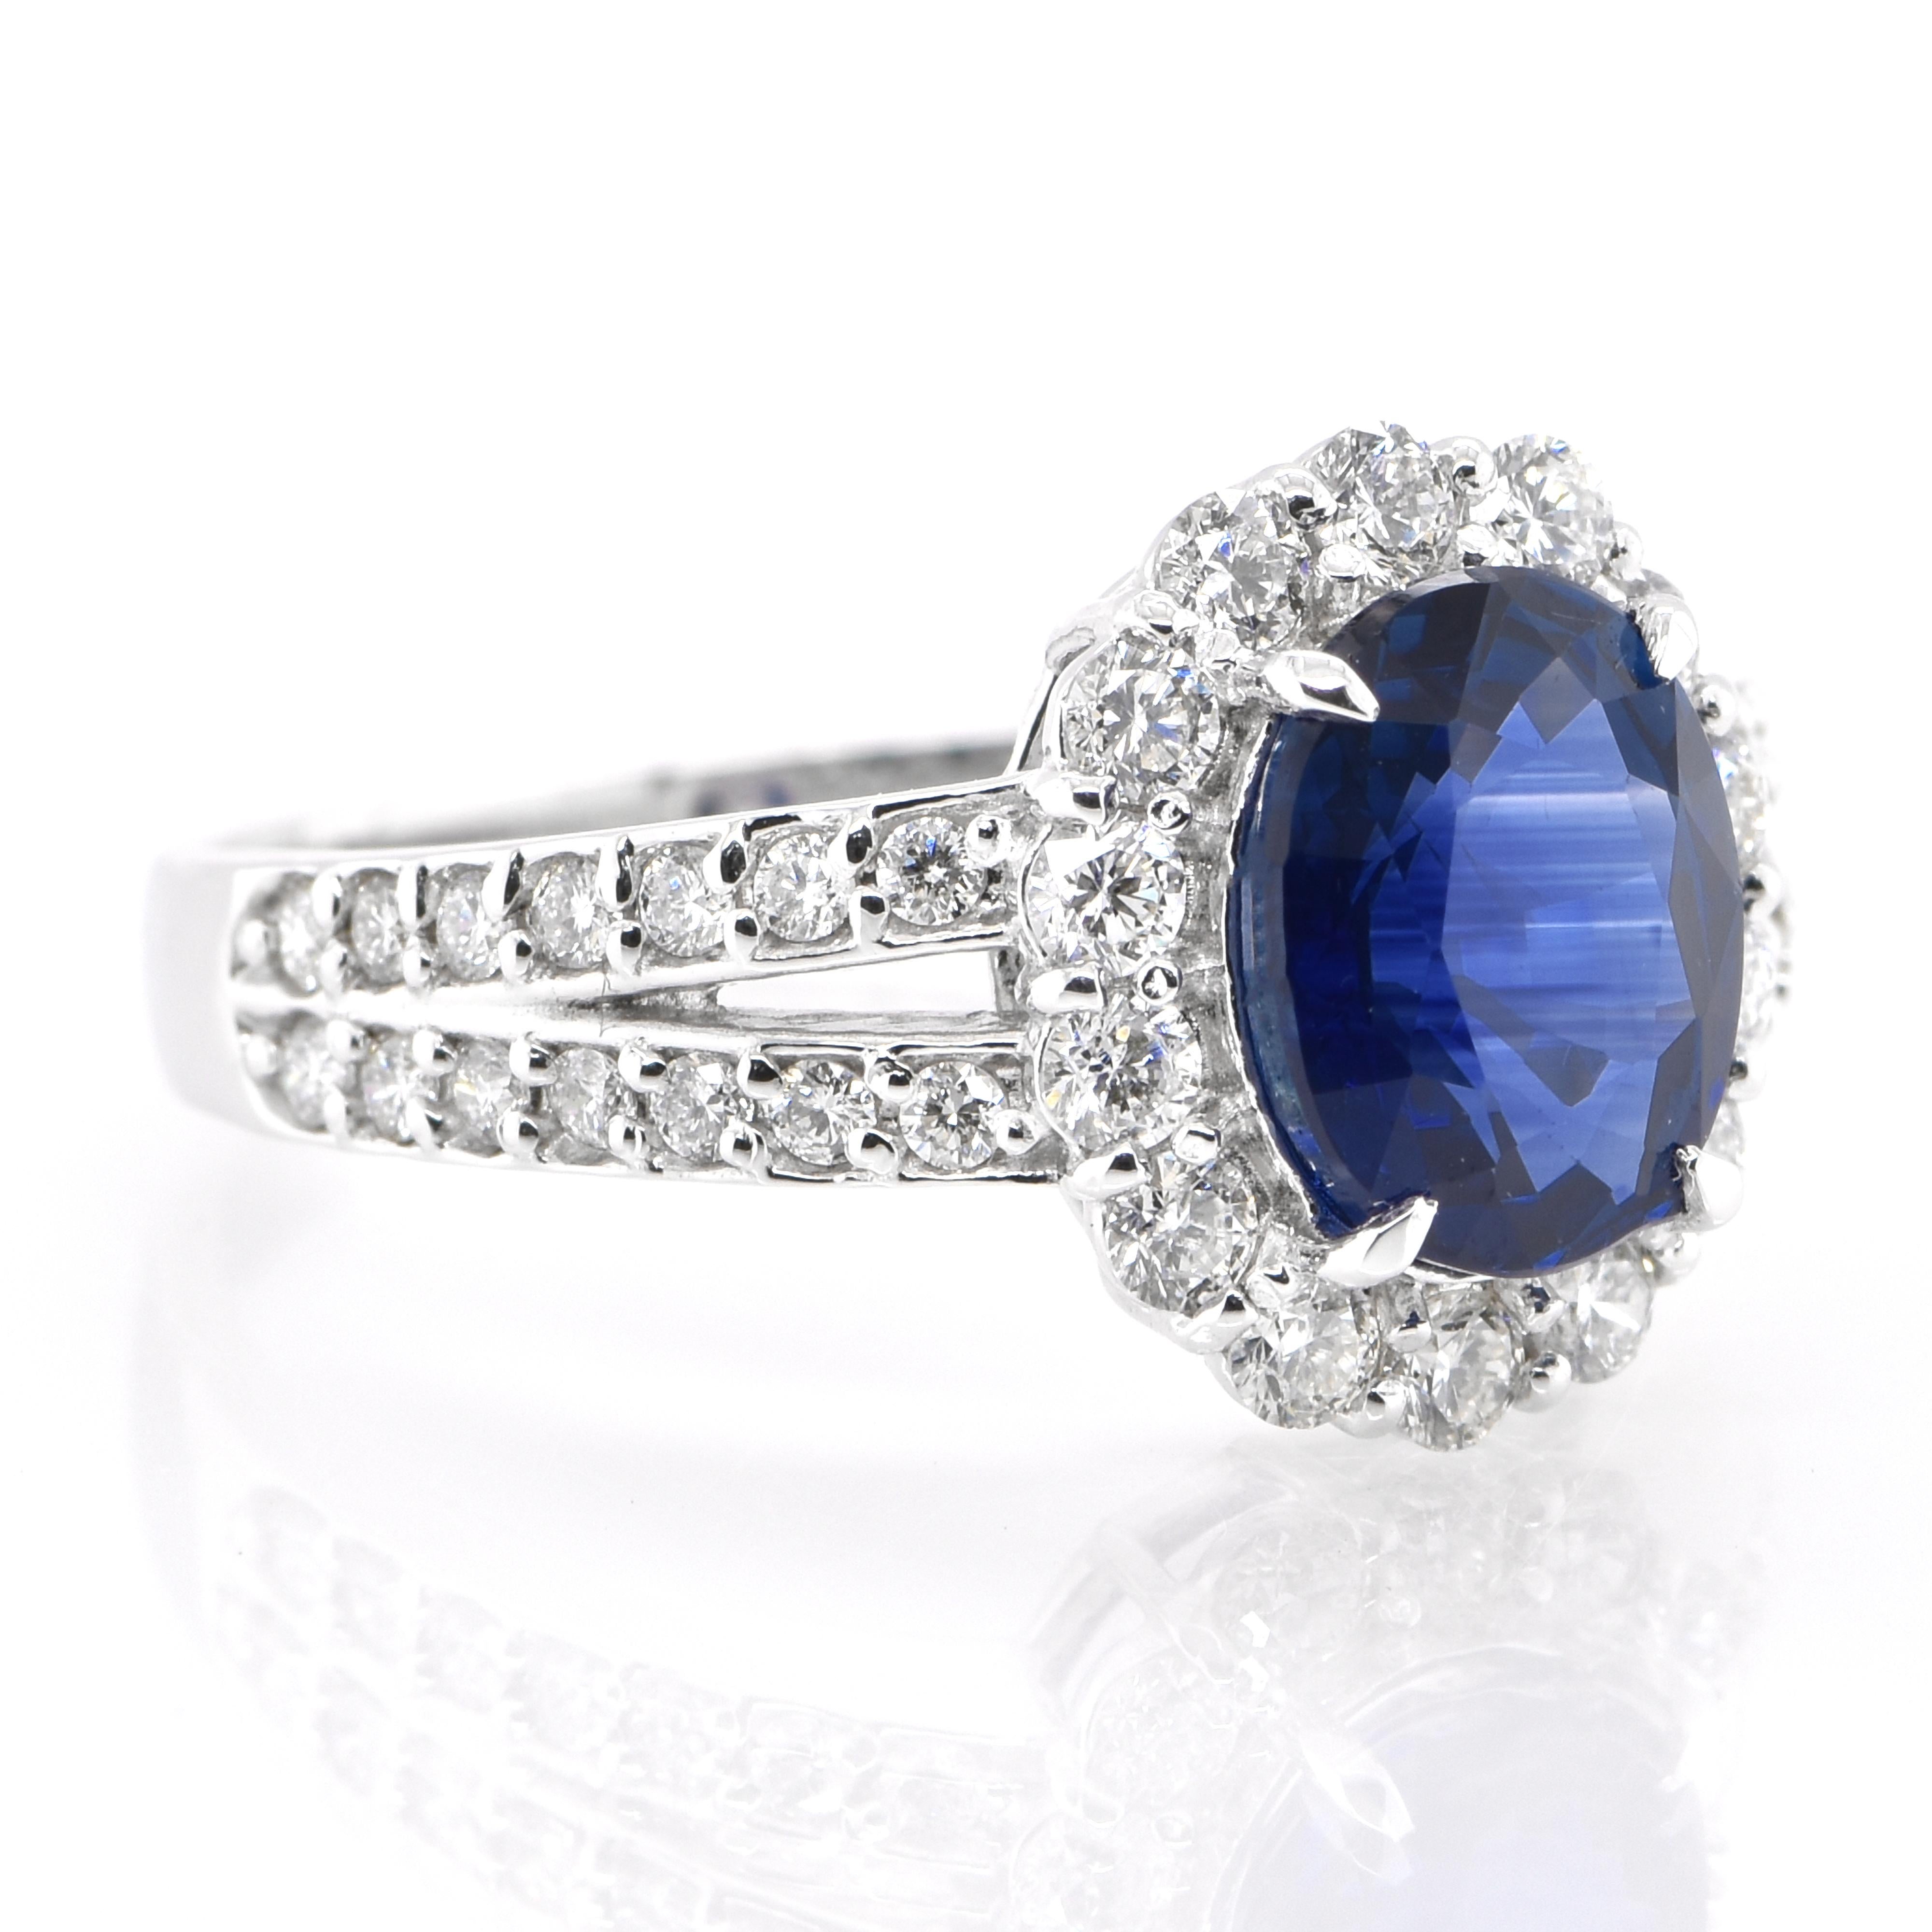 Modern GIA Certified 2.02 Carat Natural Ceylon Sapphire & Diamond Ring Set in Platinum